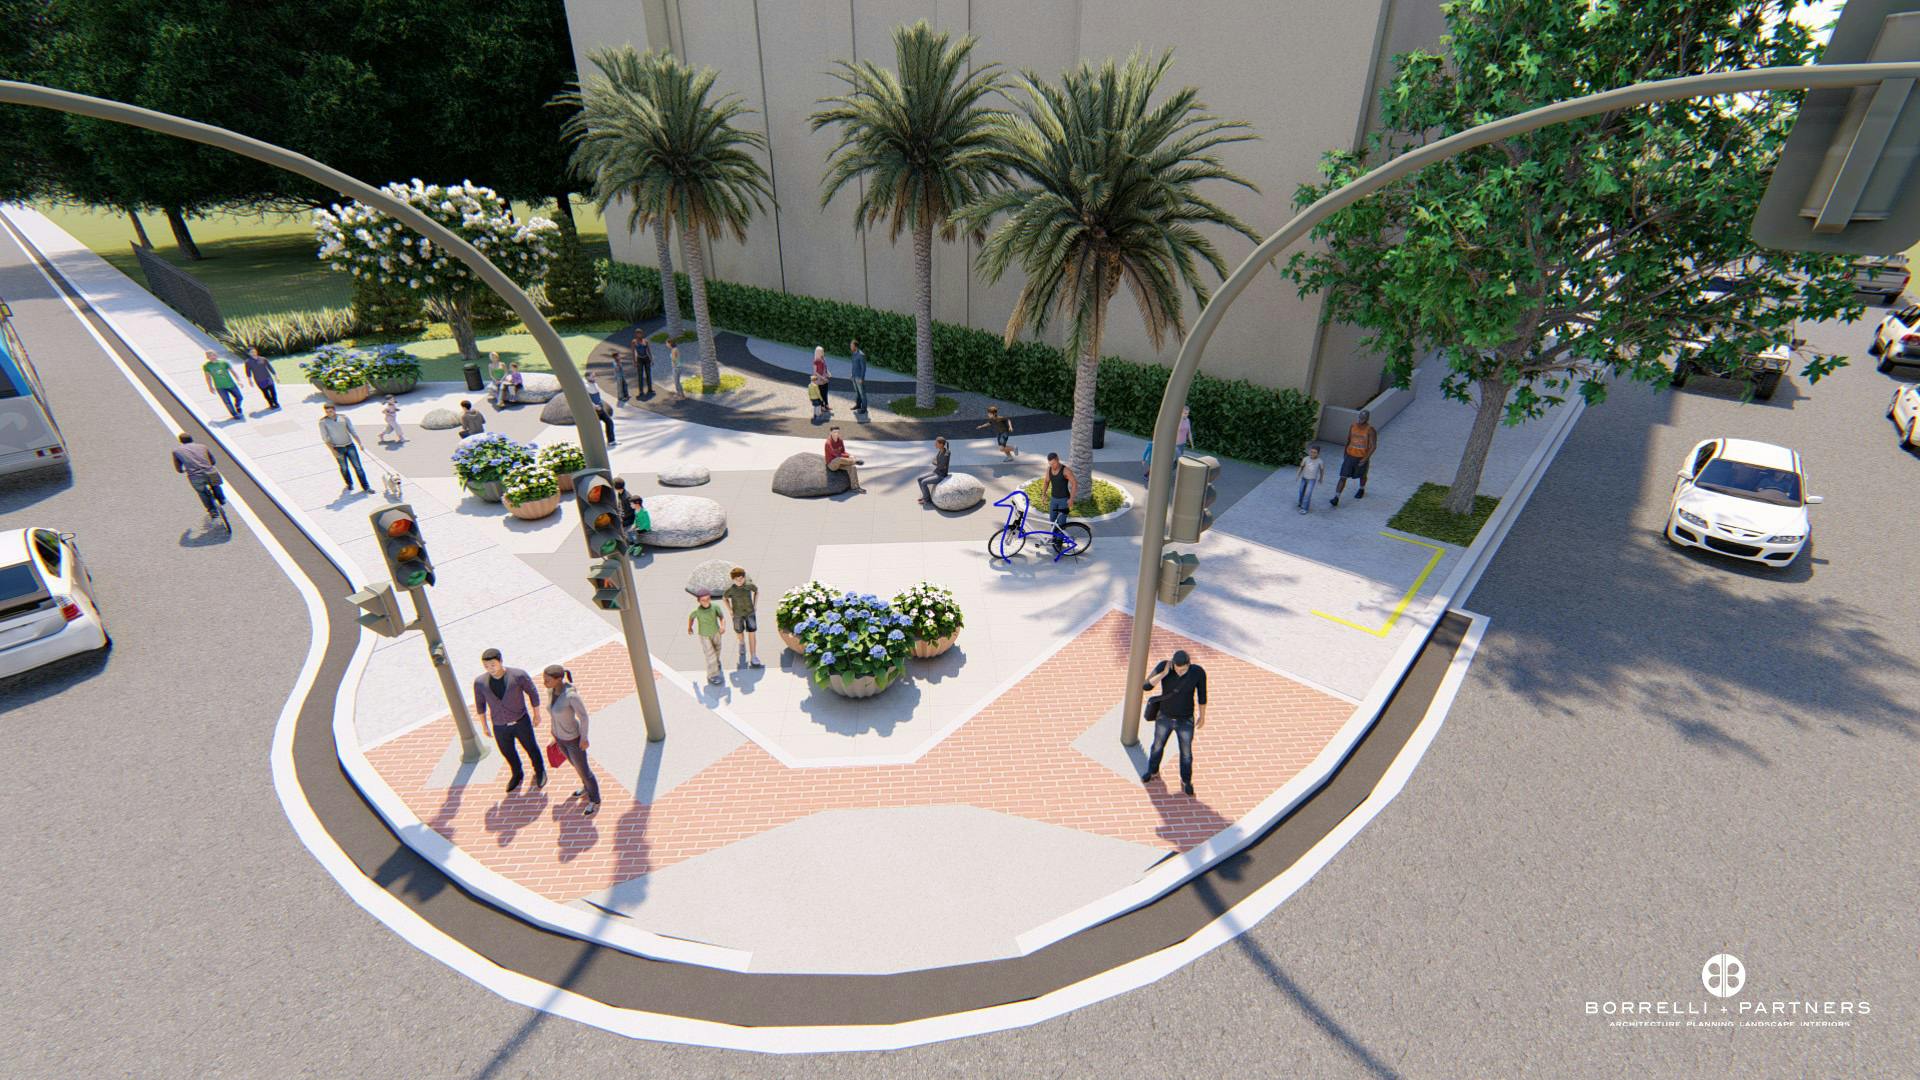 City of Orlando Breaks Ground for Lake Eola Park Expansion thumbnail image.